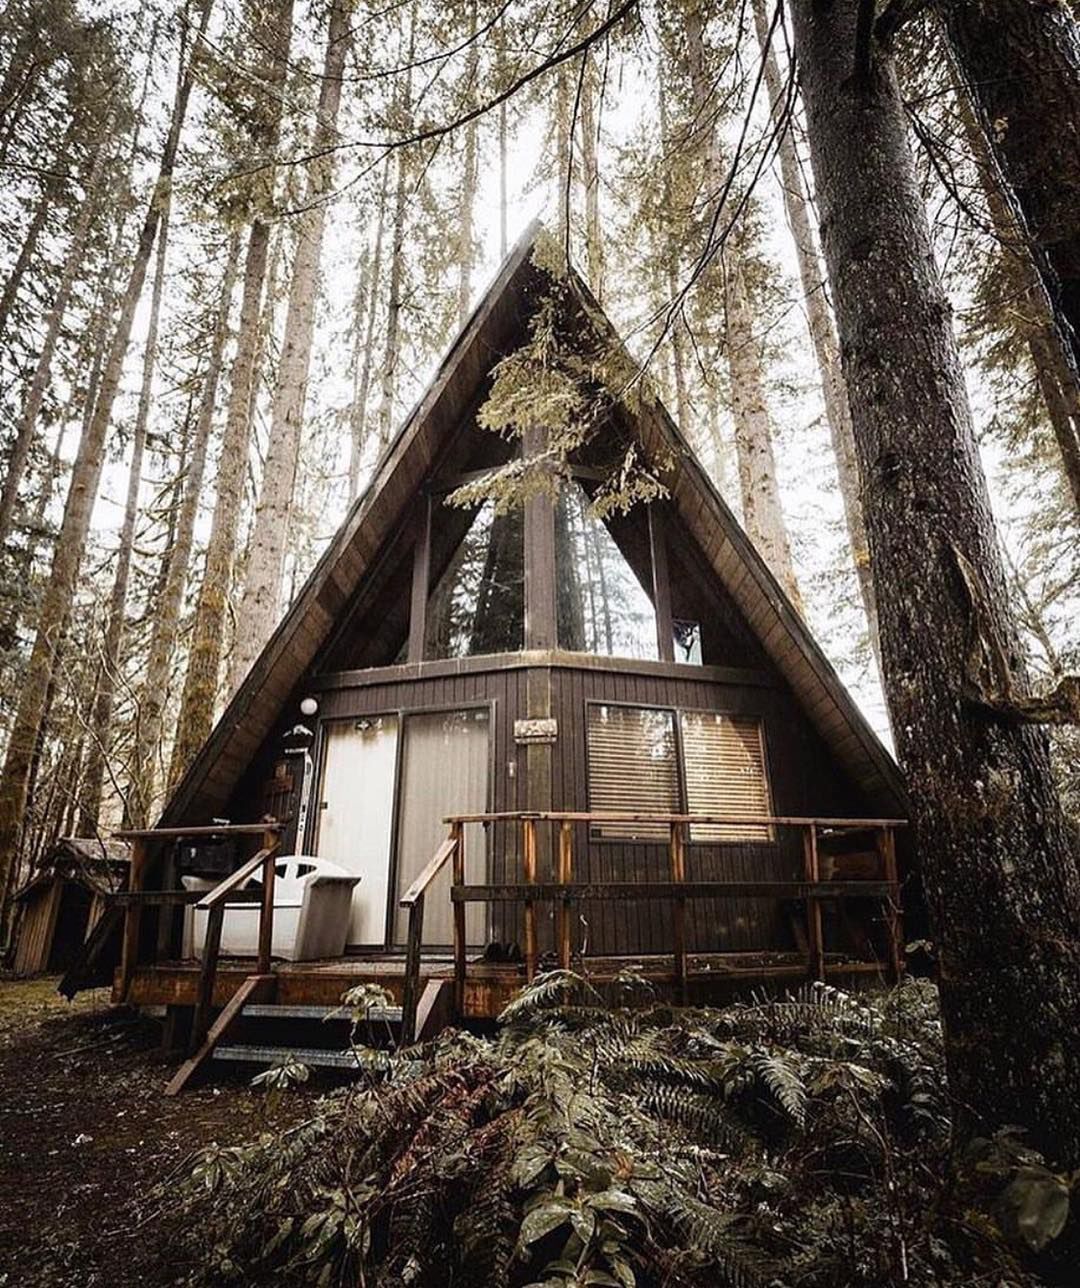 Instagram/Tiny House